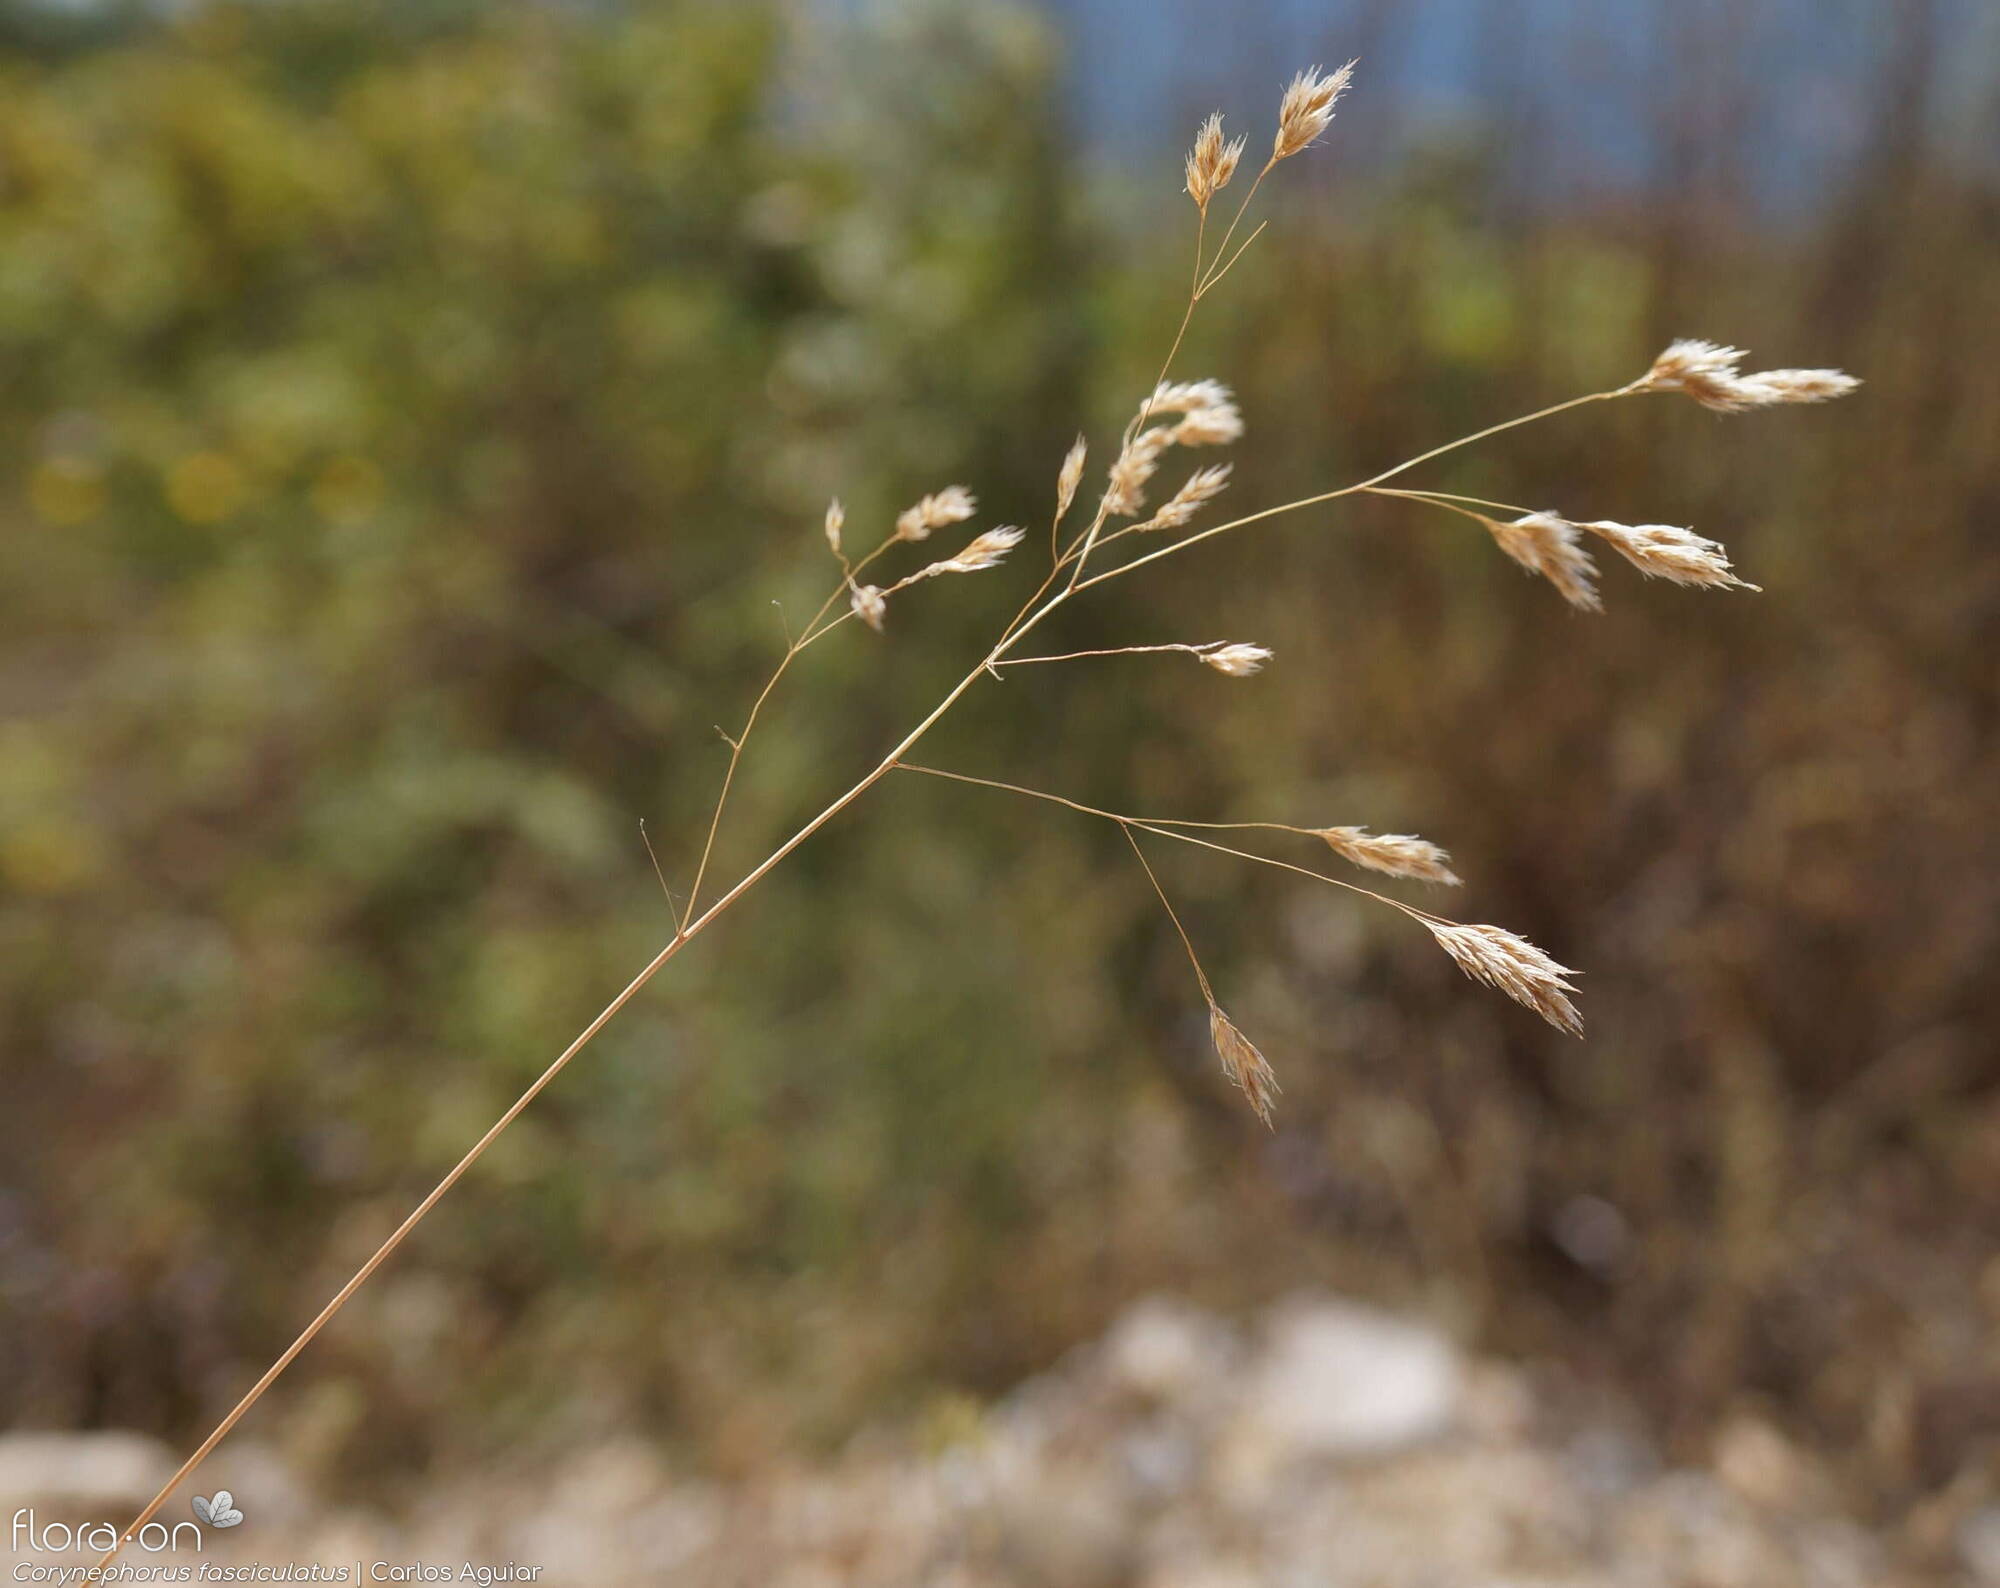 Corynephorus fasciculatus - Flor (geral) | Carlos Aguiar; CC BY-NC 4.0